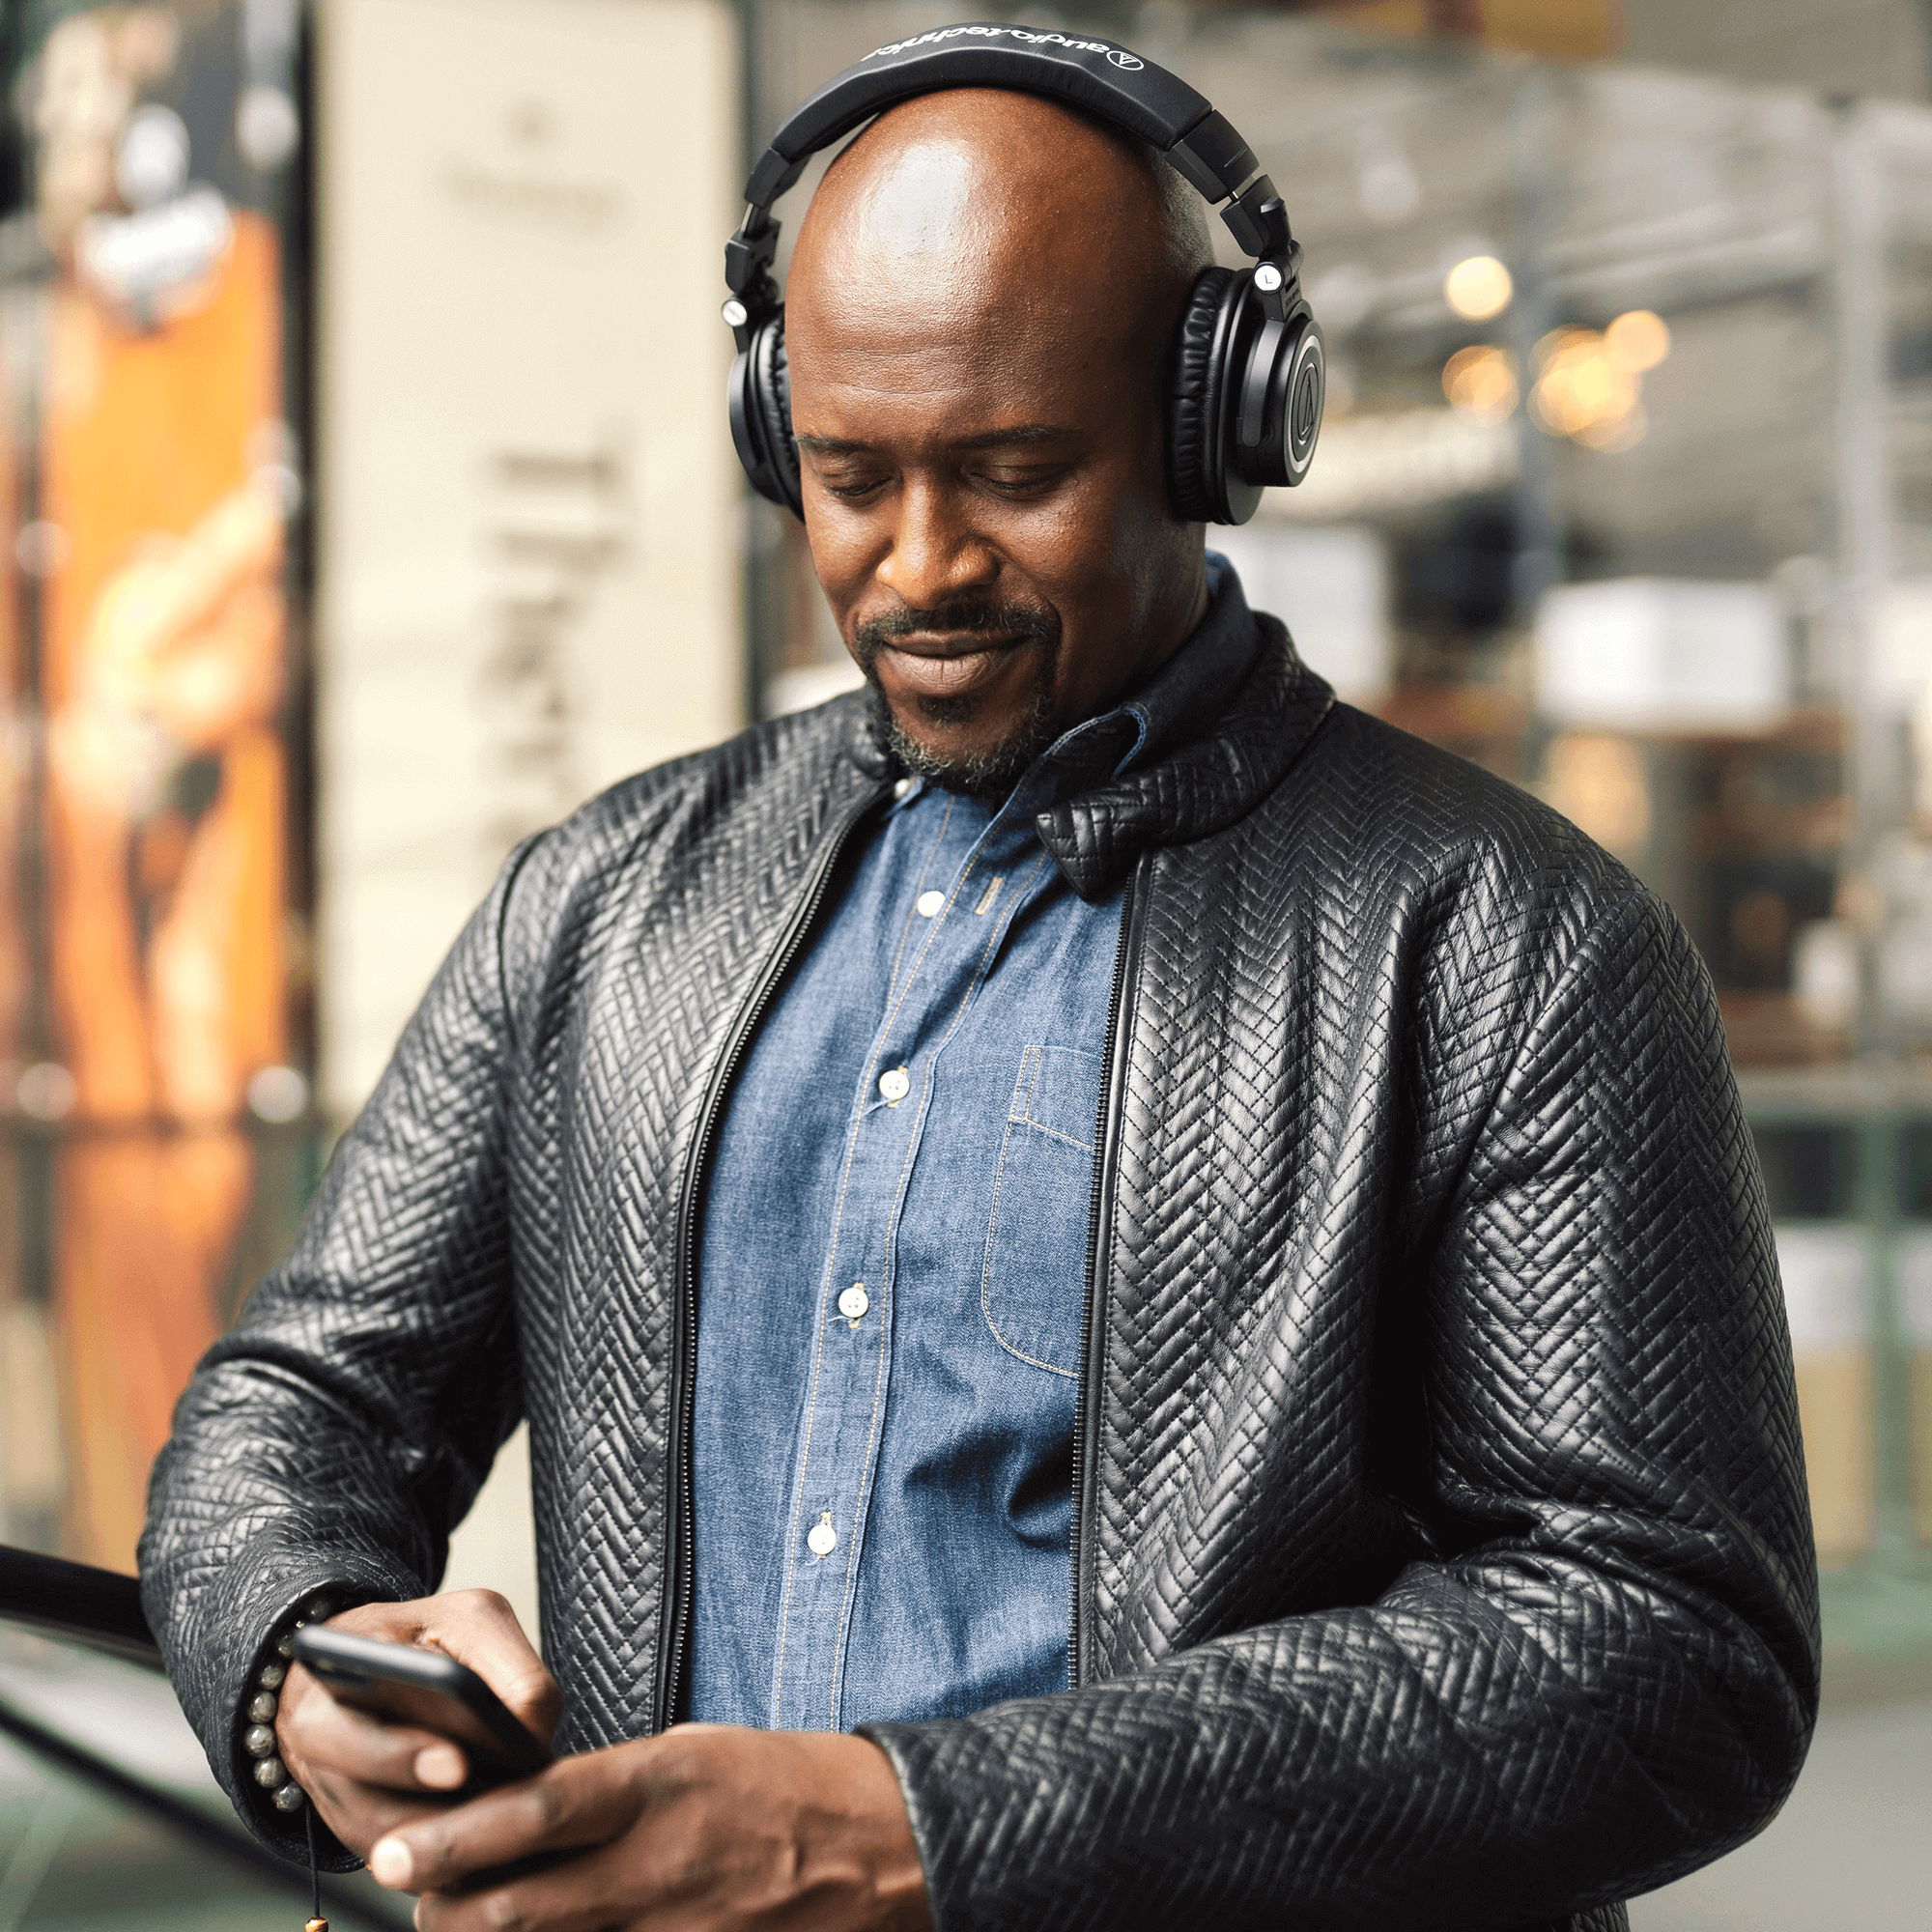 ATH-M50xBT2 | Wireless Over-Ear Headphones | Audio-Technica